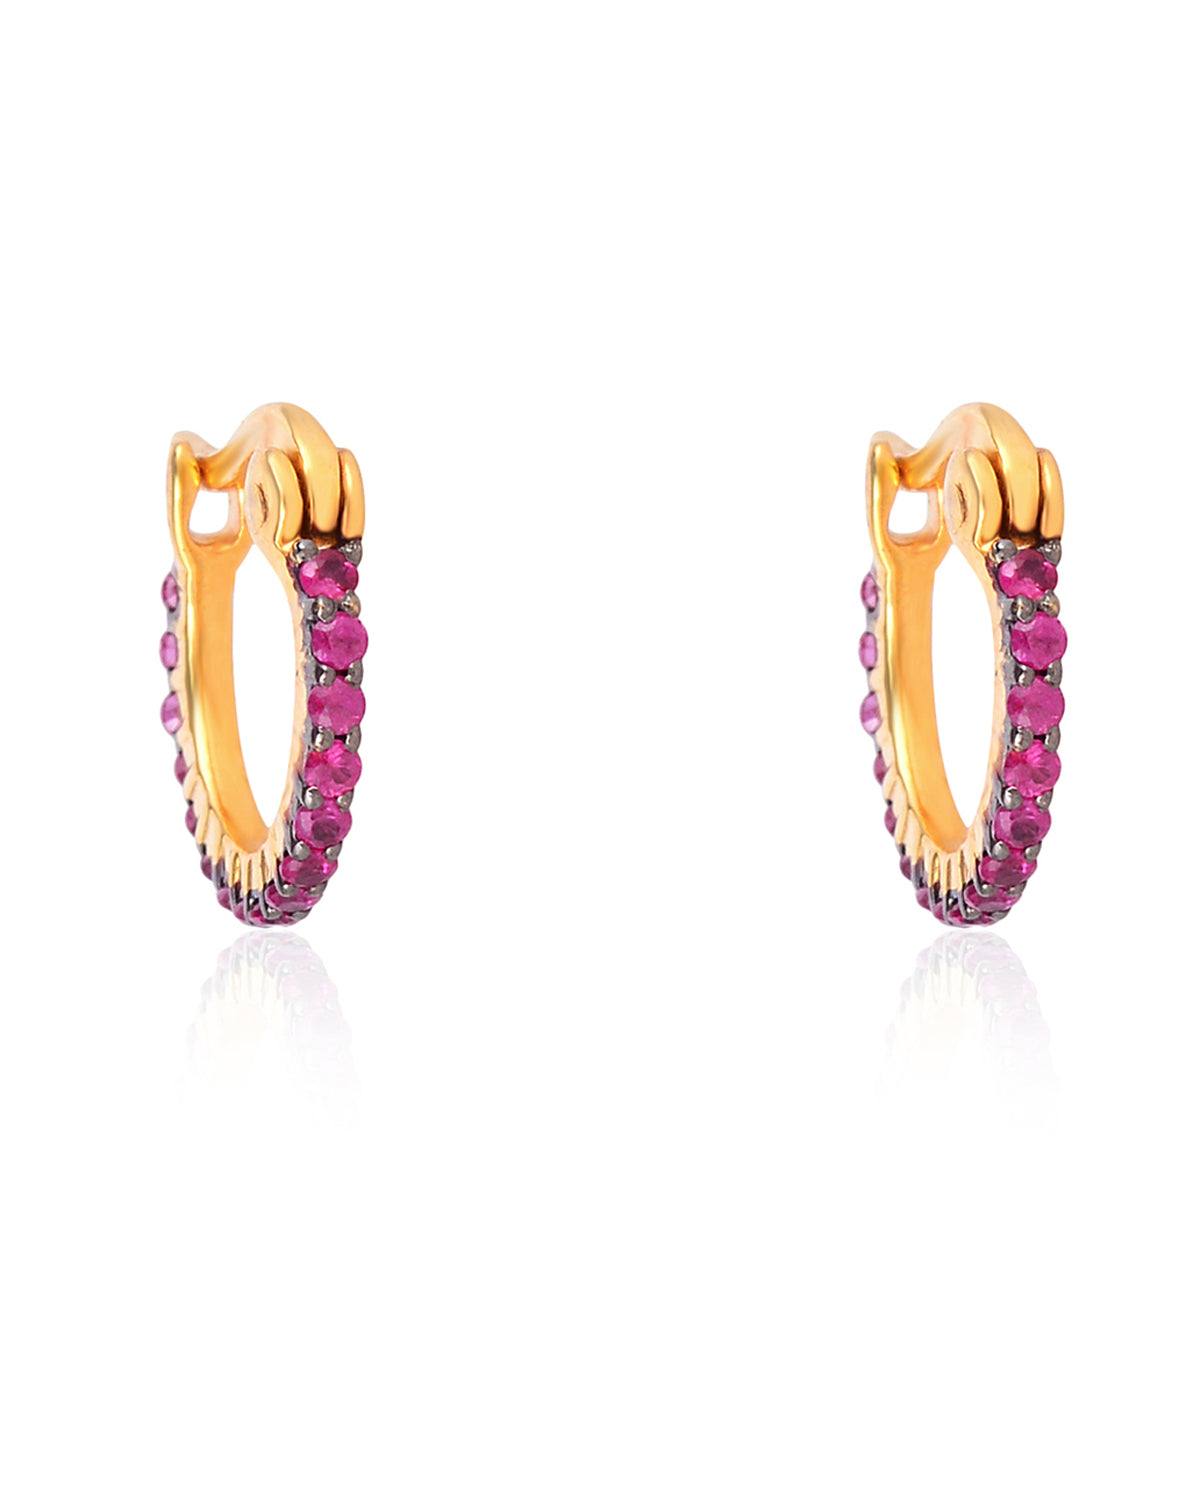 14K Assorted Gemstone Earrings